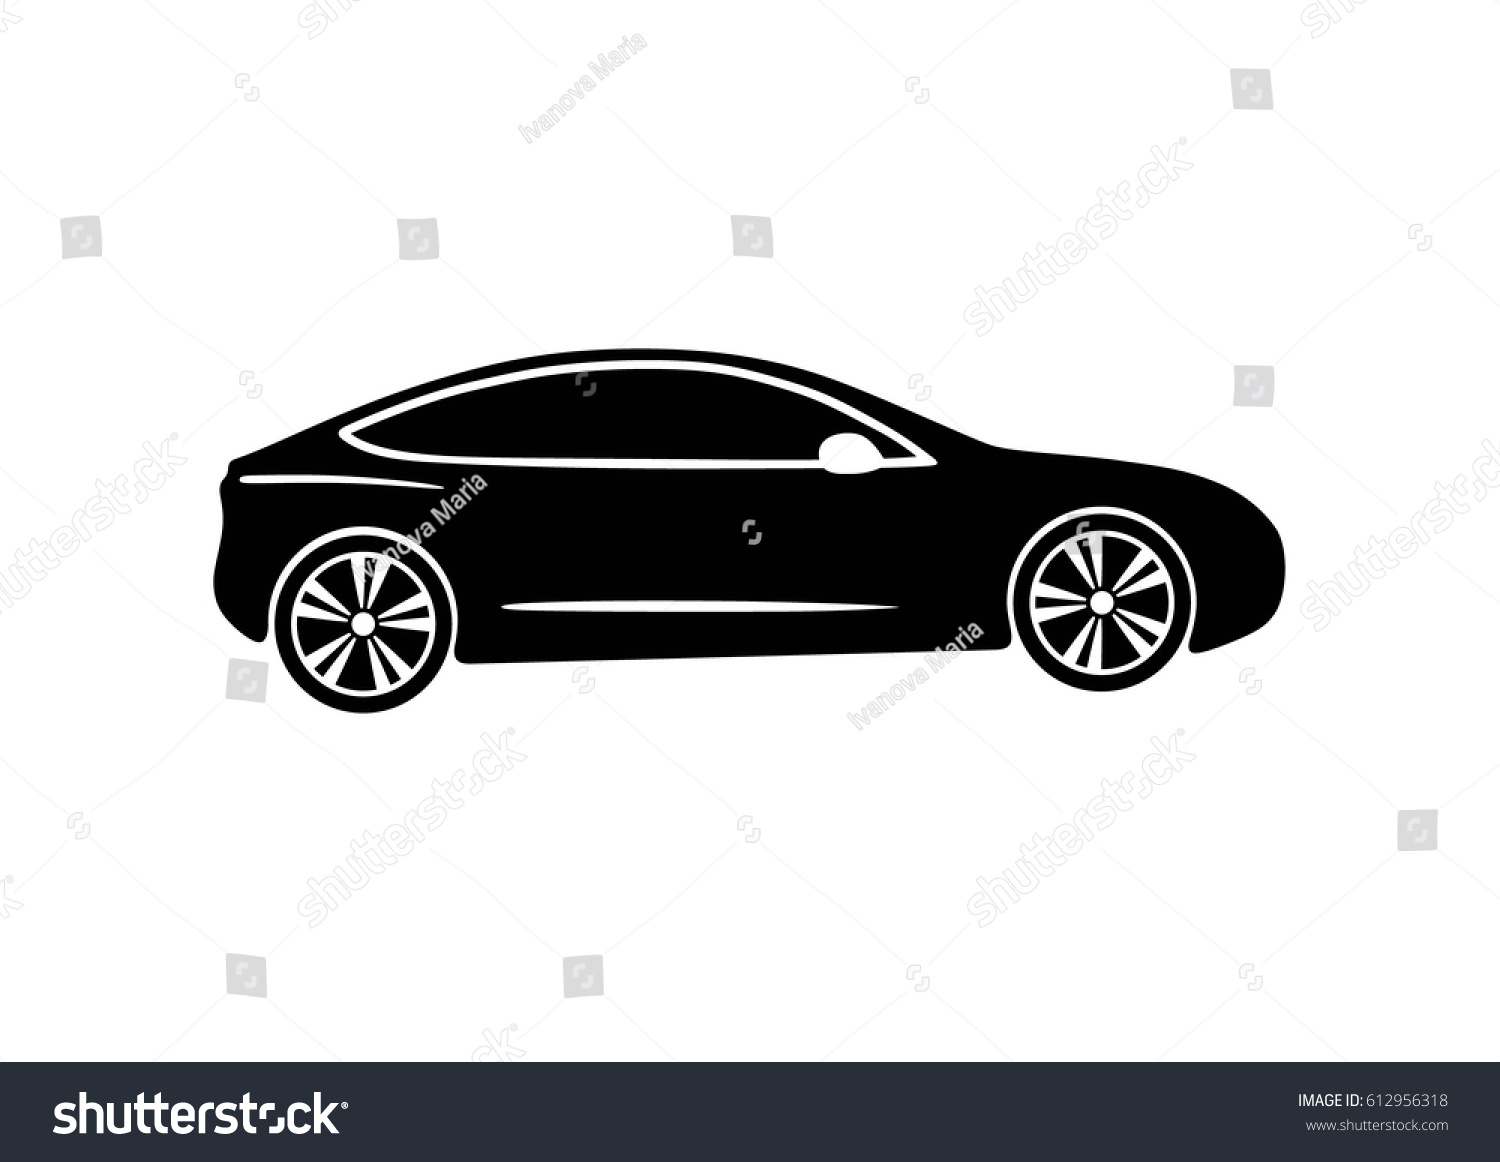 icon electric modern car tesla vector stock vector royalty free 612956318 https www shutterstock com image vector icon electric modern car tesla vector 612956318